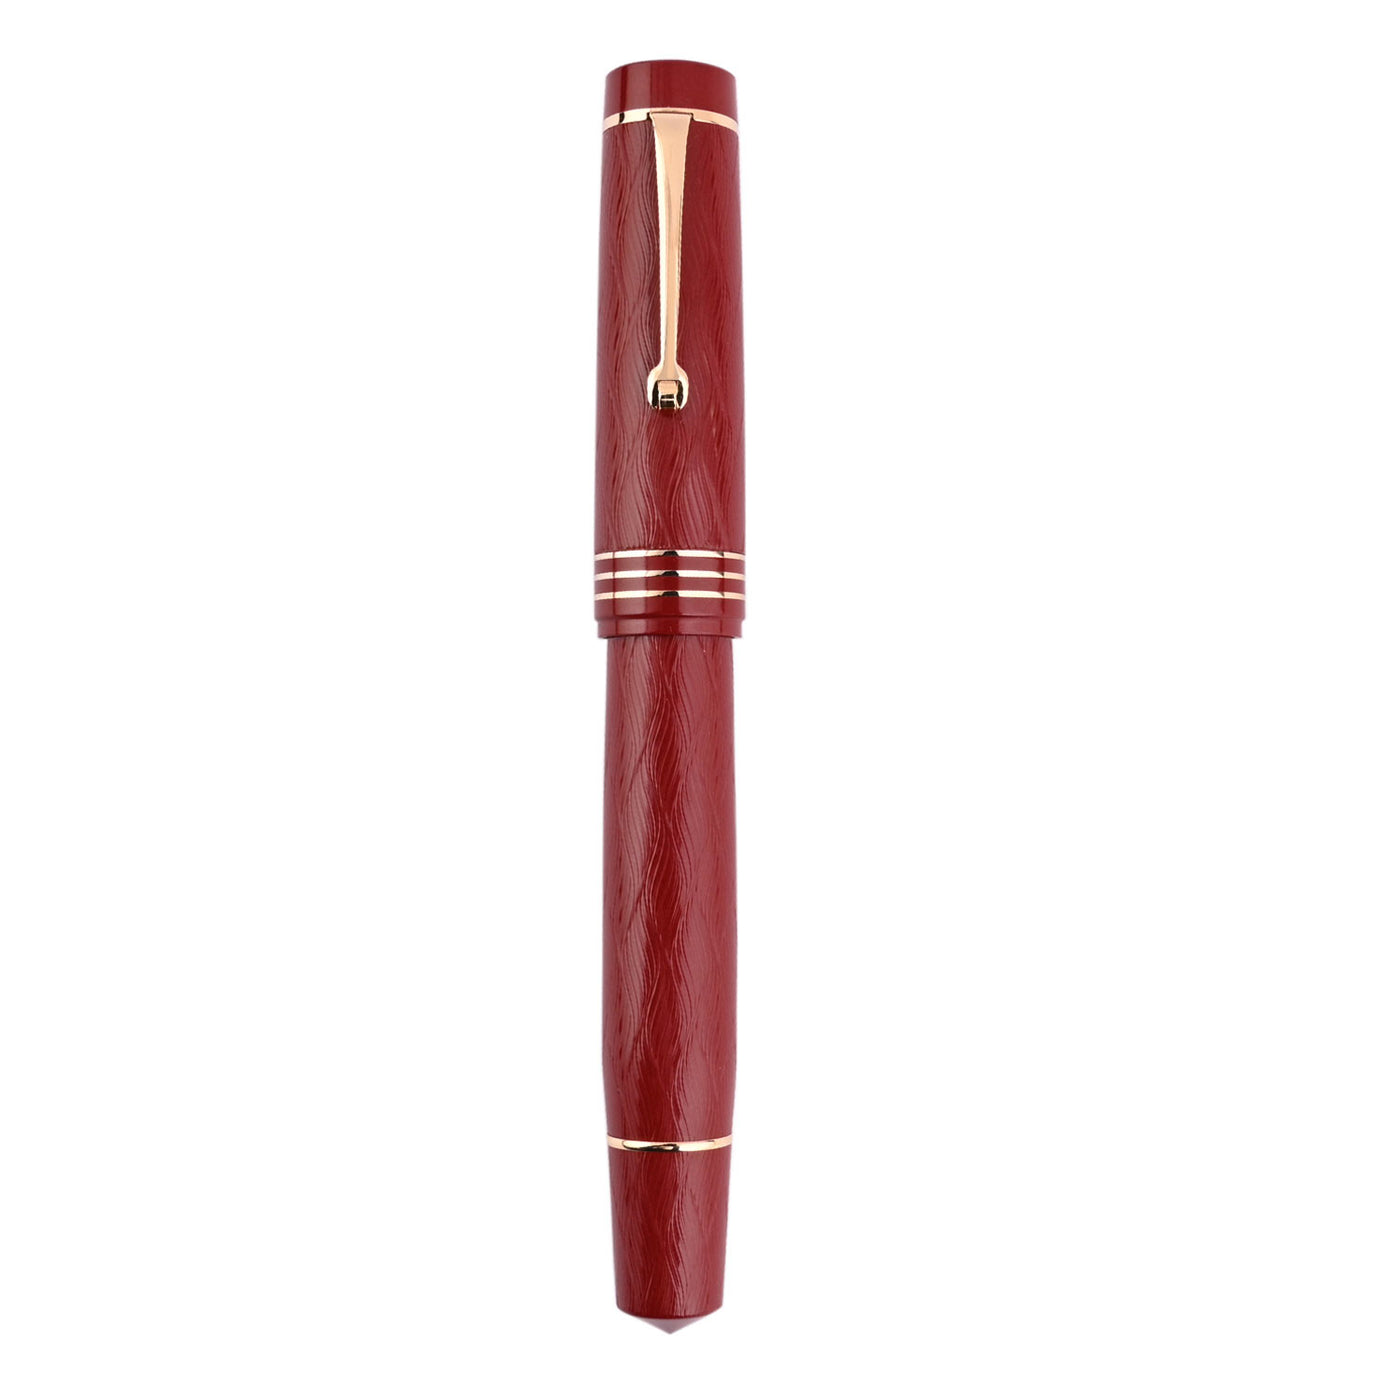 Leonardo MZ Grande Audace Art Nouveau No.6 Fountain Pen - Red Granata GT (Limited Edition) 5